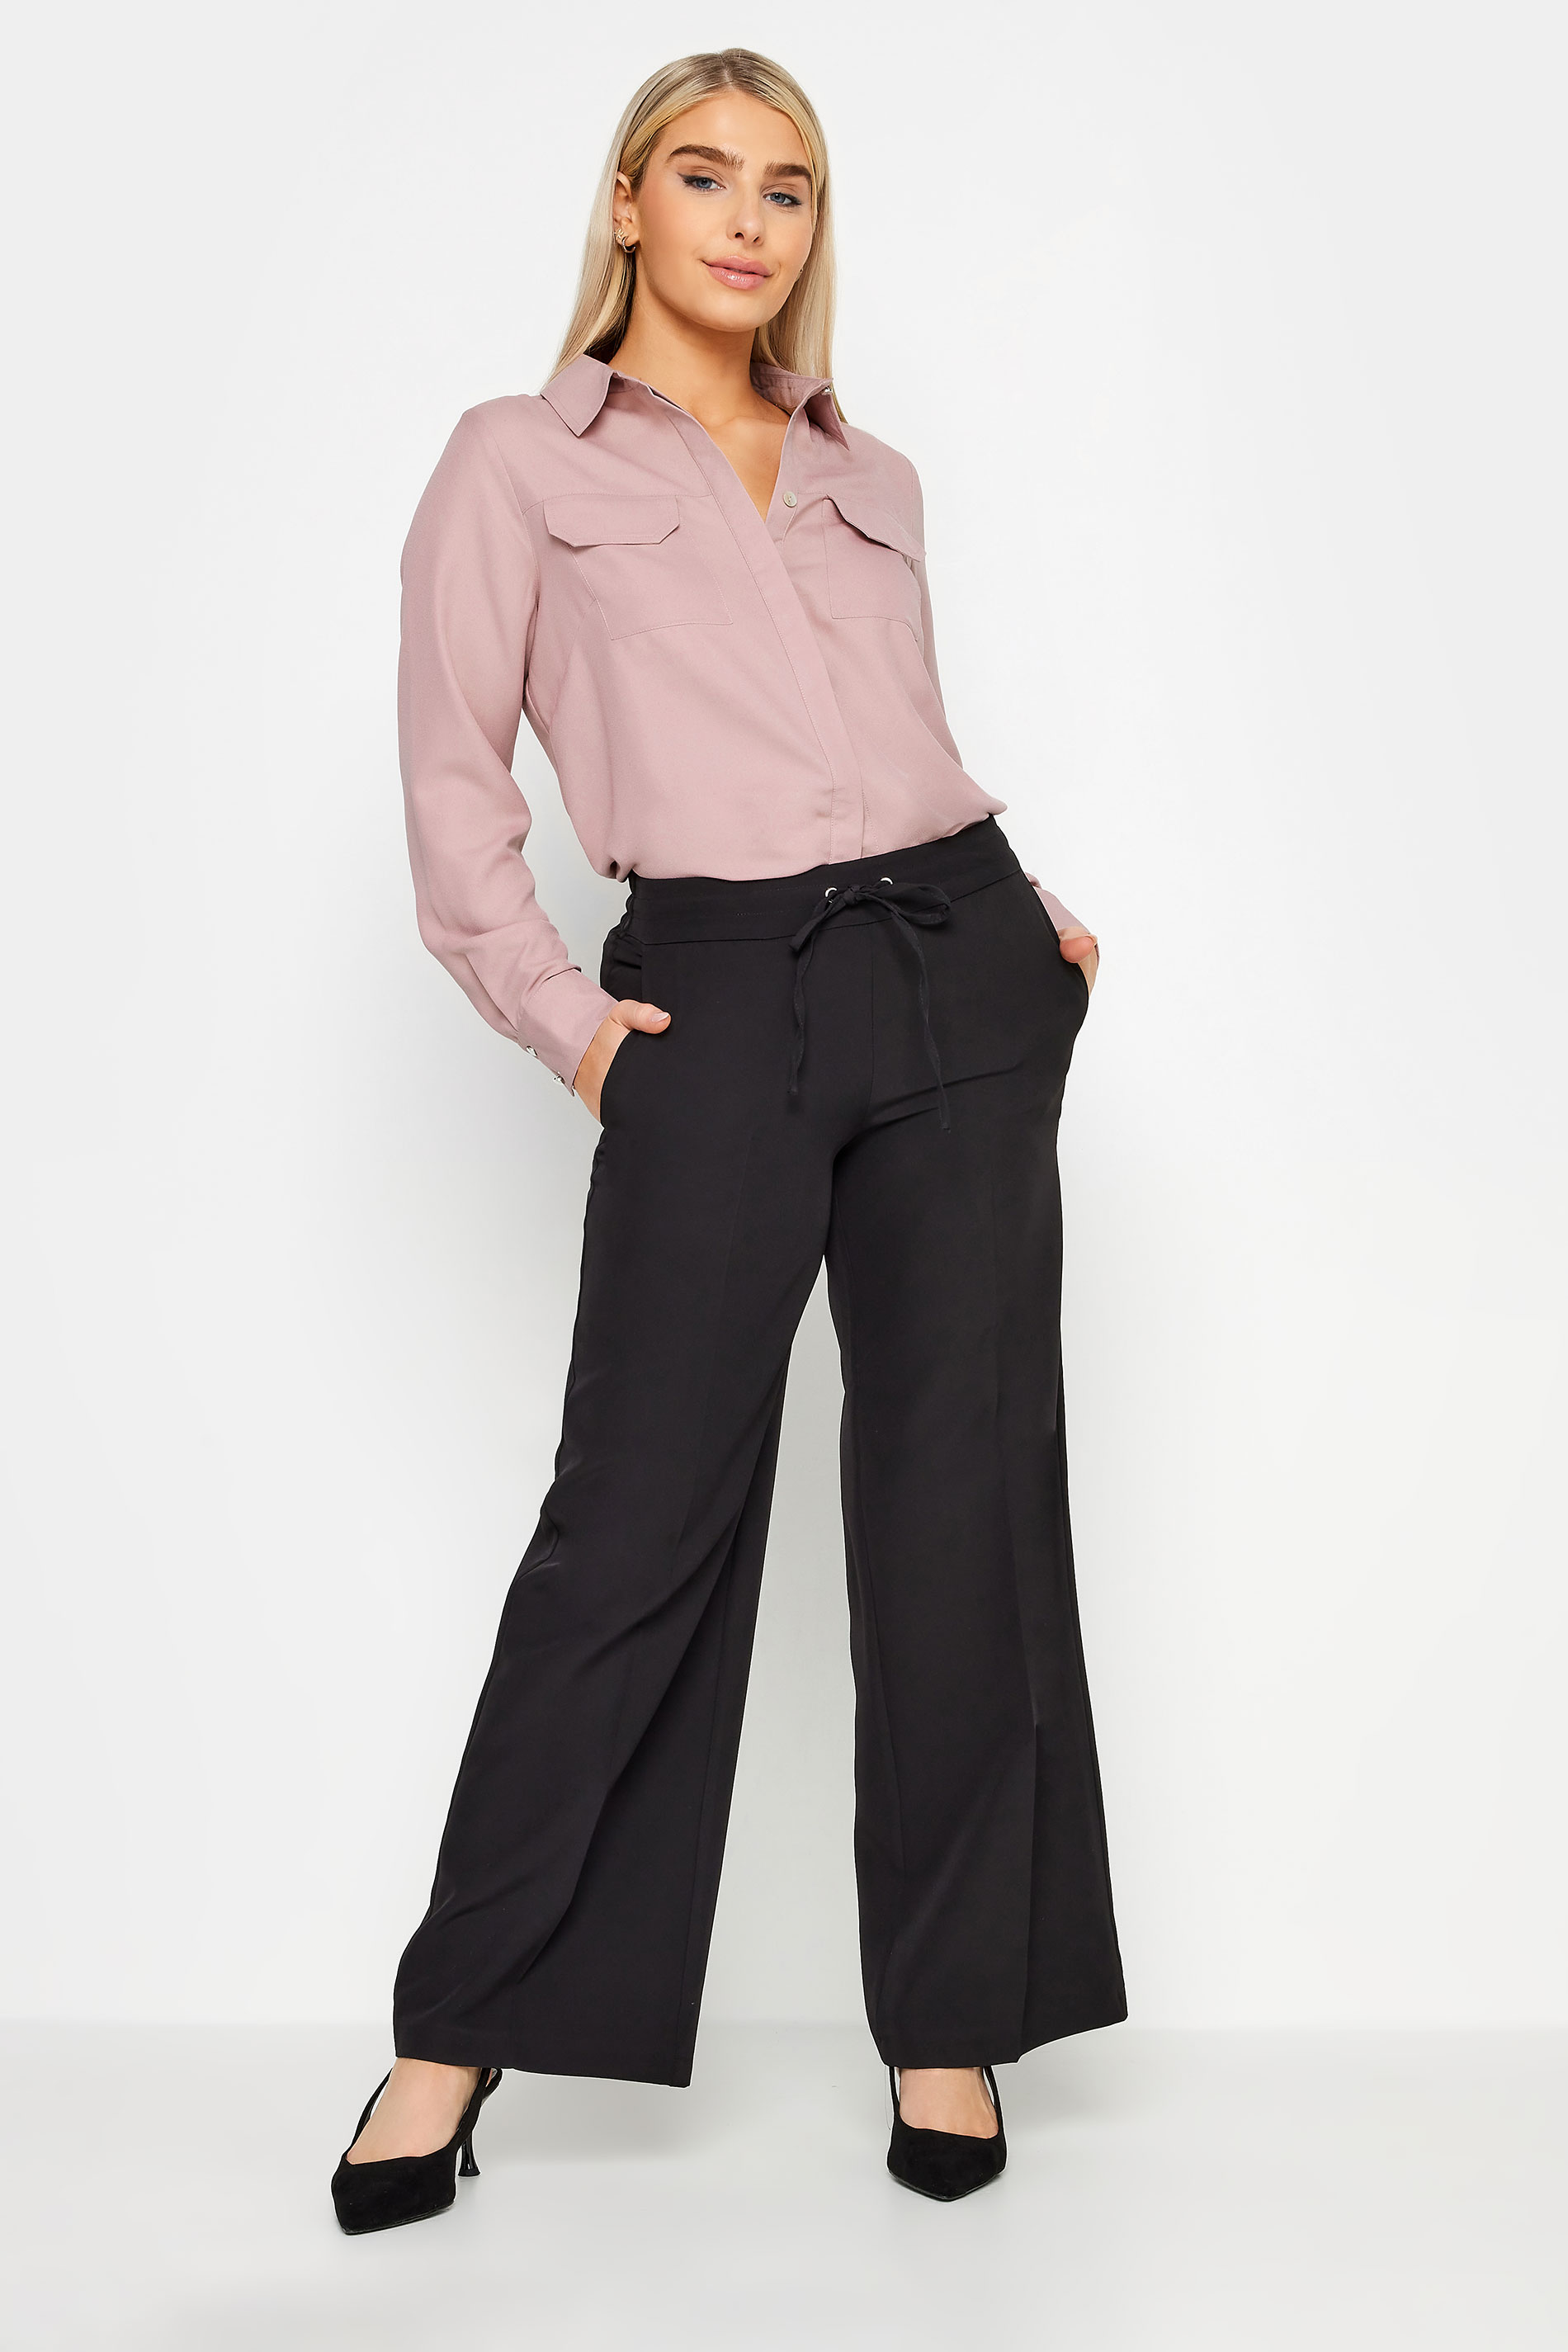 M&Co Dusky Pink Utility Shirt | M&Co 2